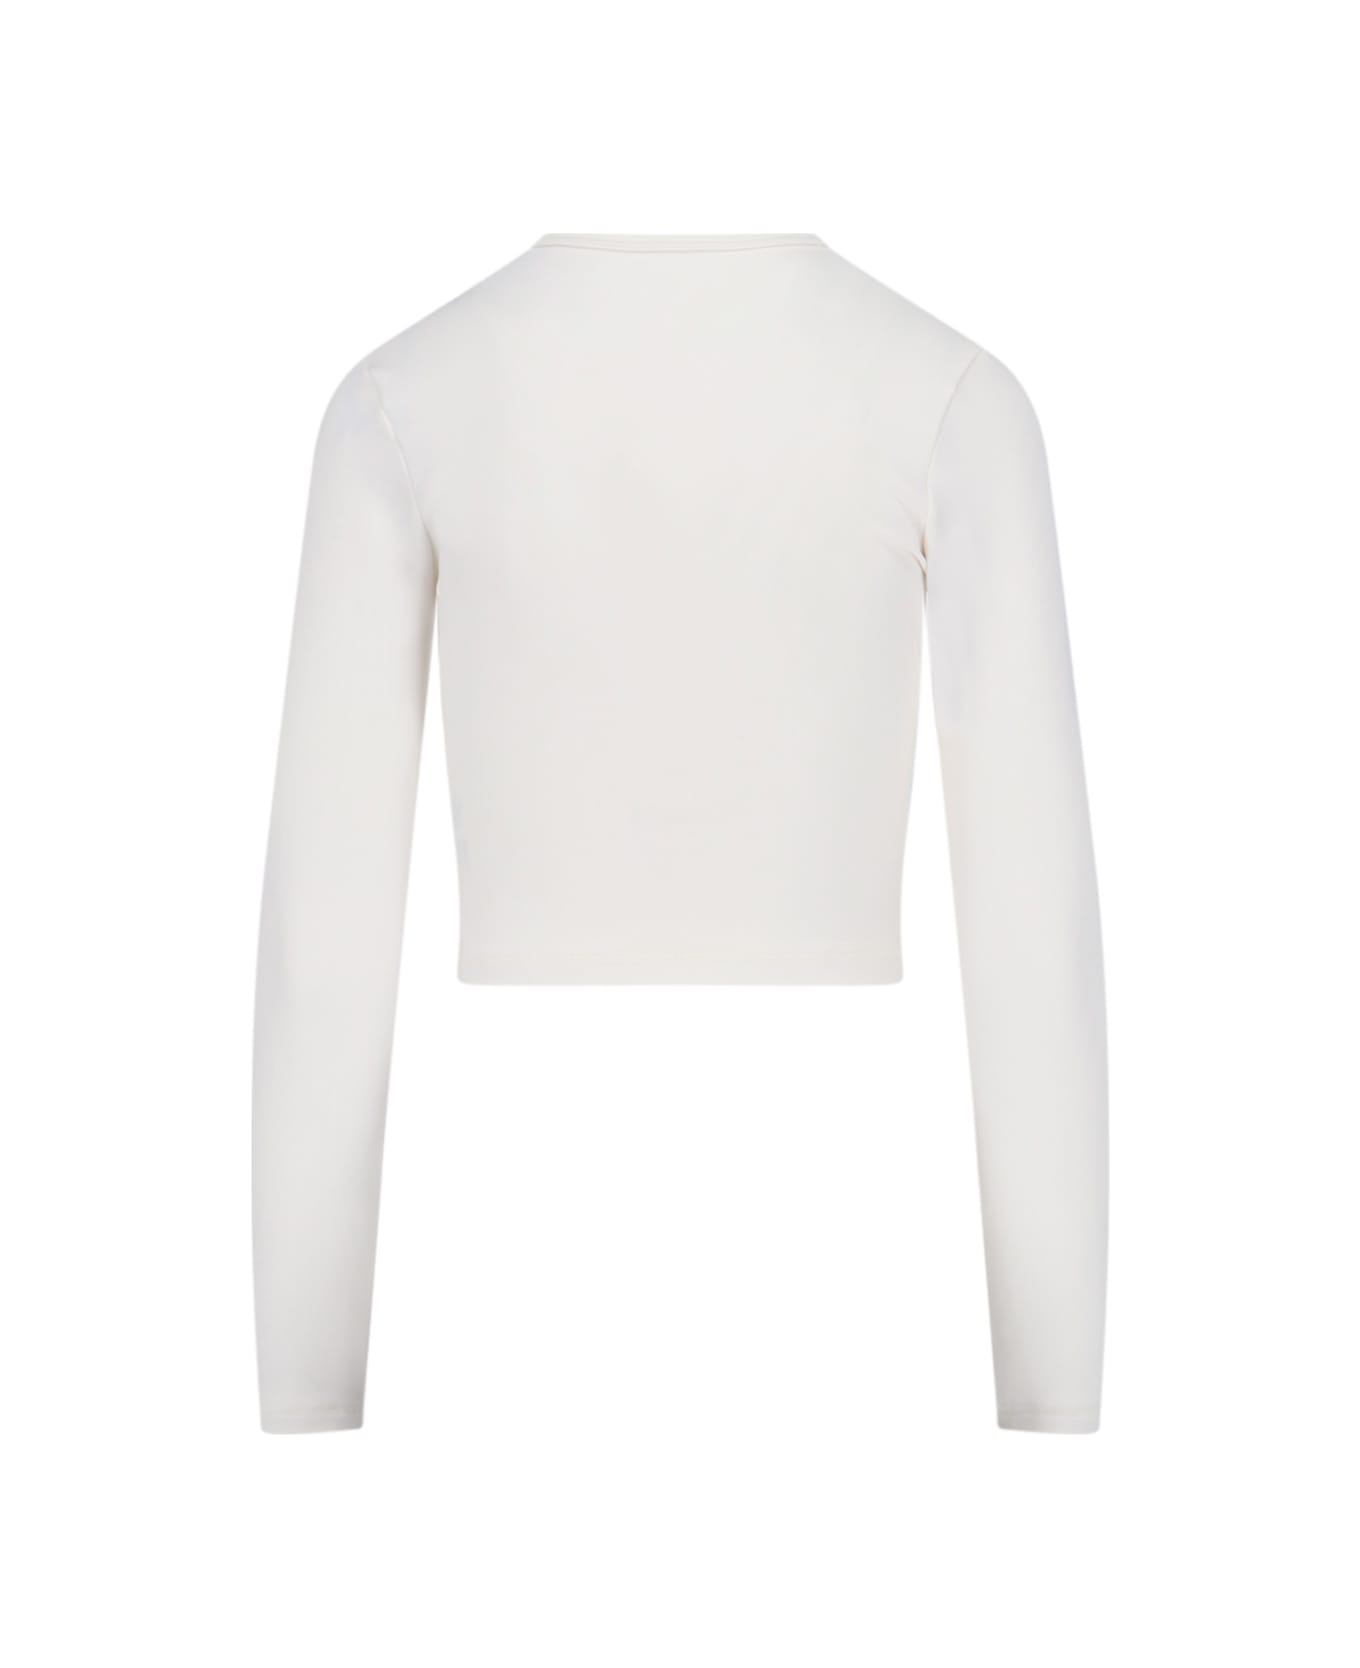 Jil Sander Logo Crop T-shirt - White